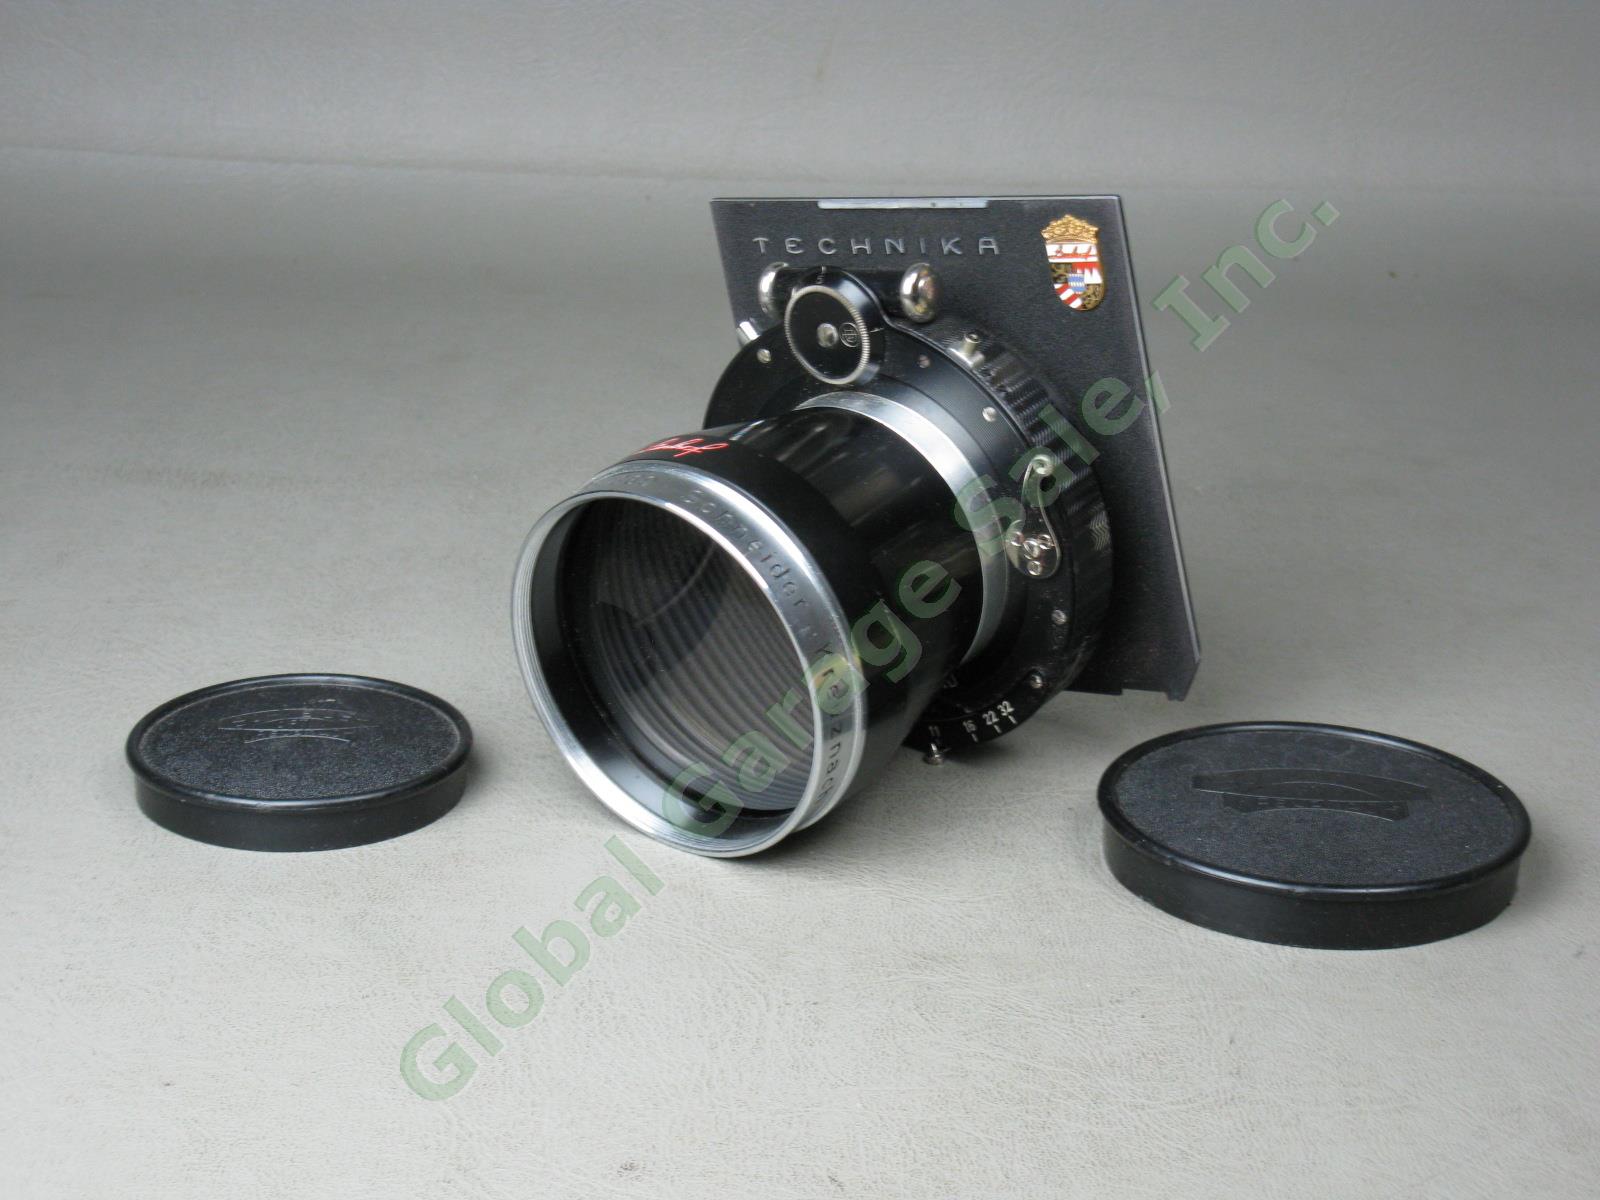 Linhof Technika Tele-Xenar f/5.5 360mm Schneider-Kreuznach Camera Lens 7663619